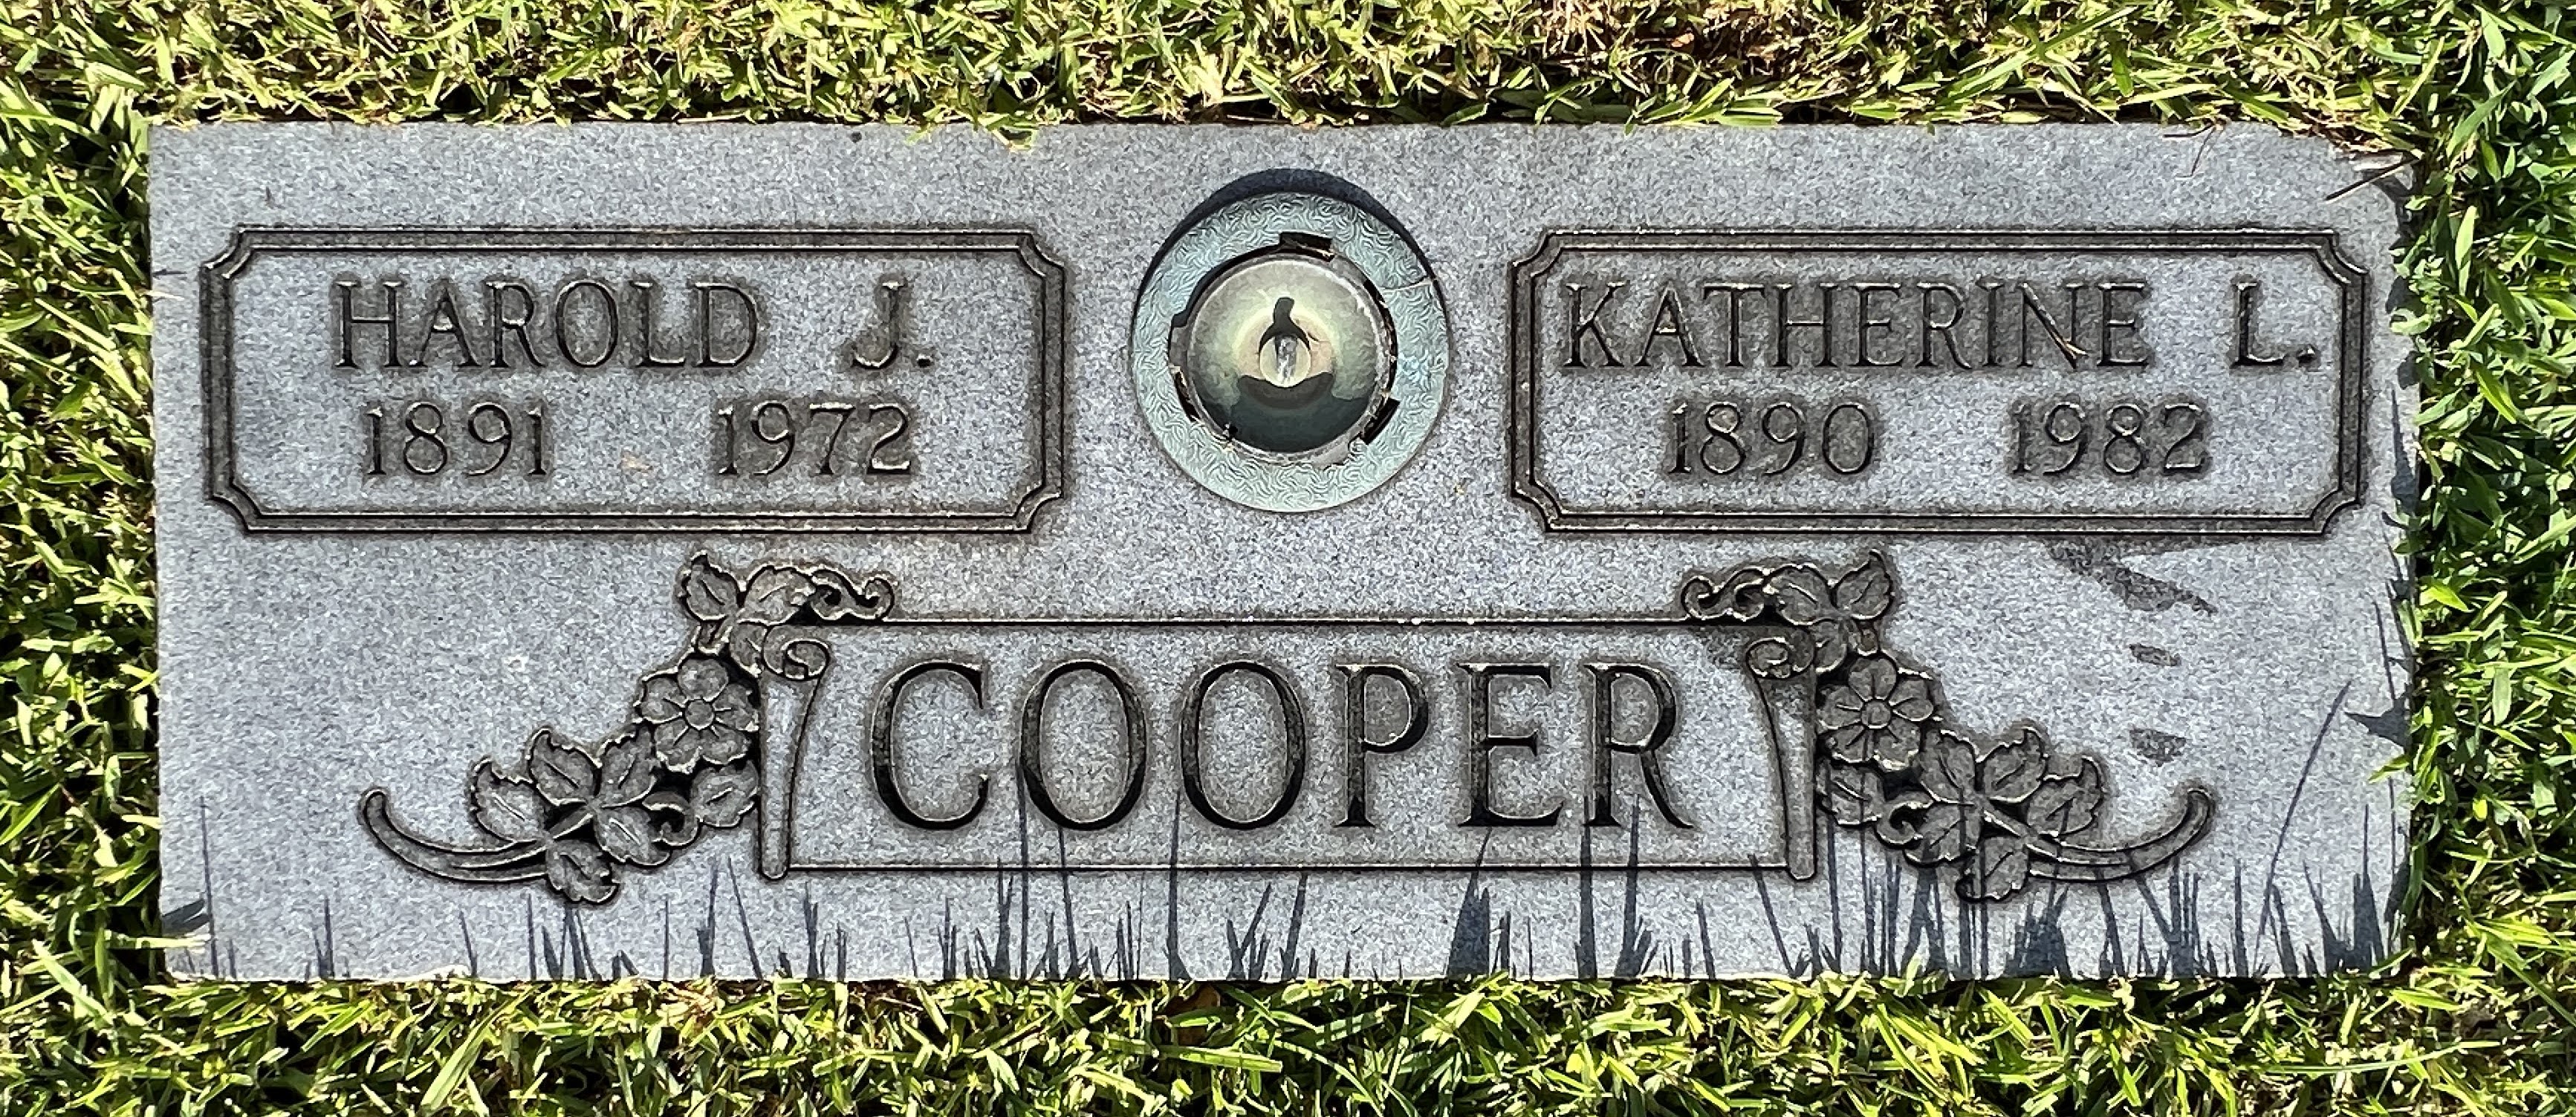 Harold J Cooper